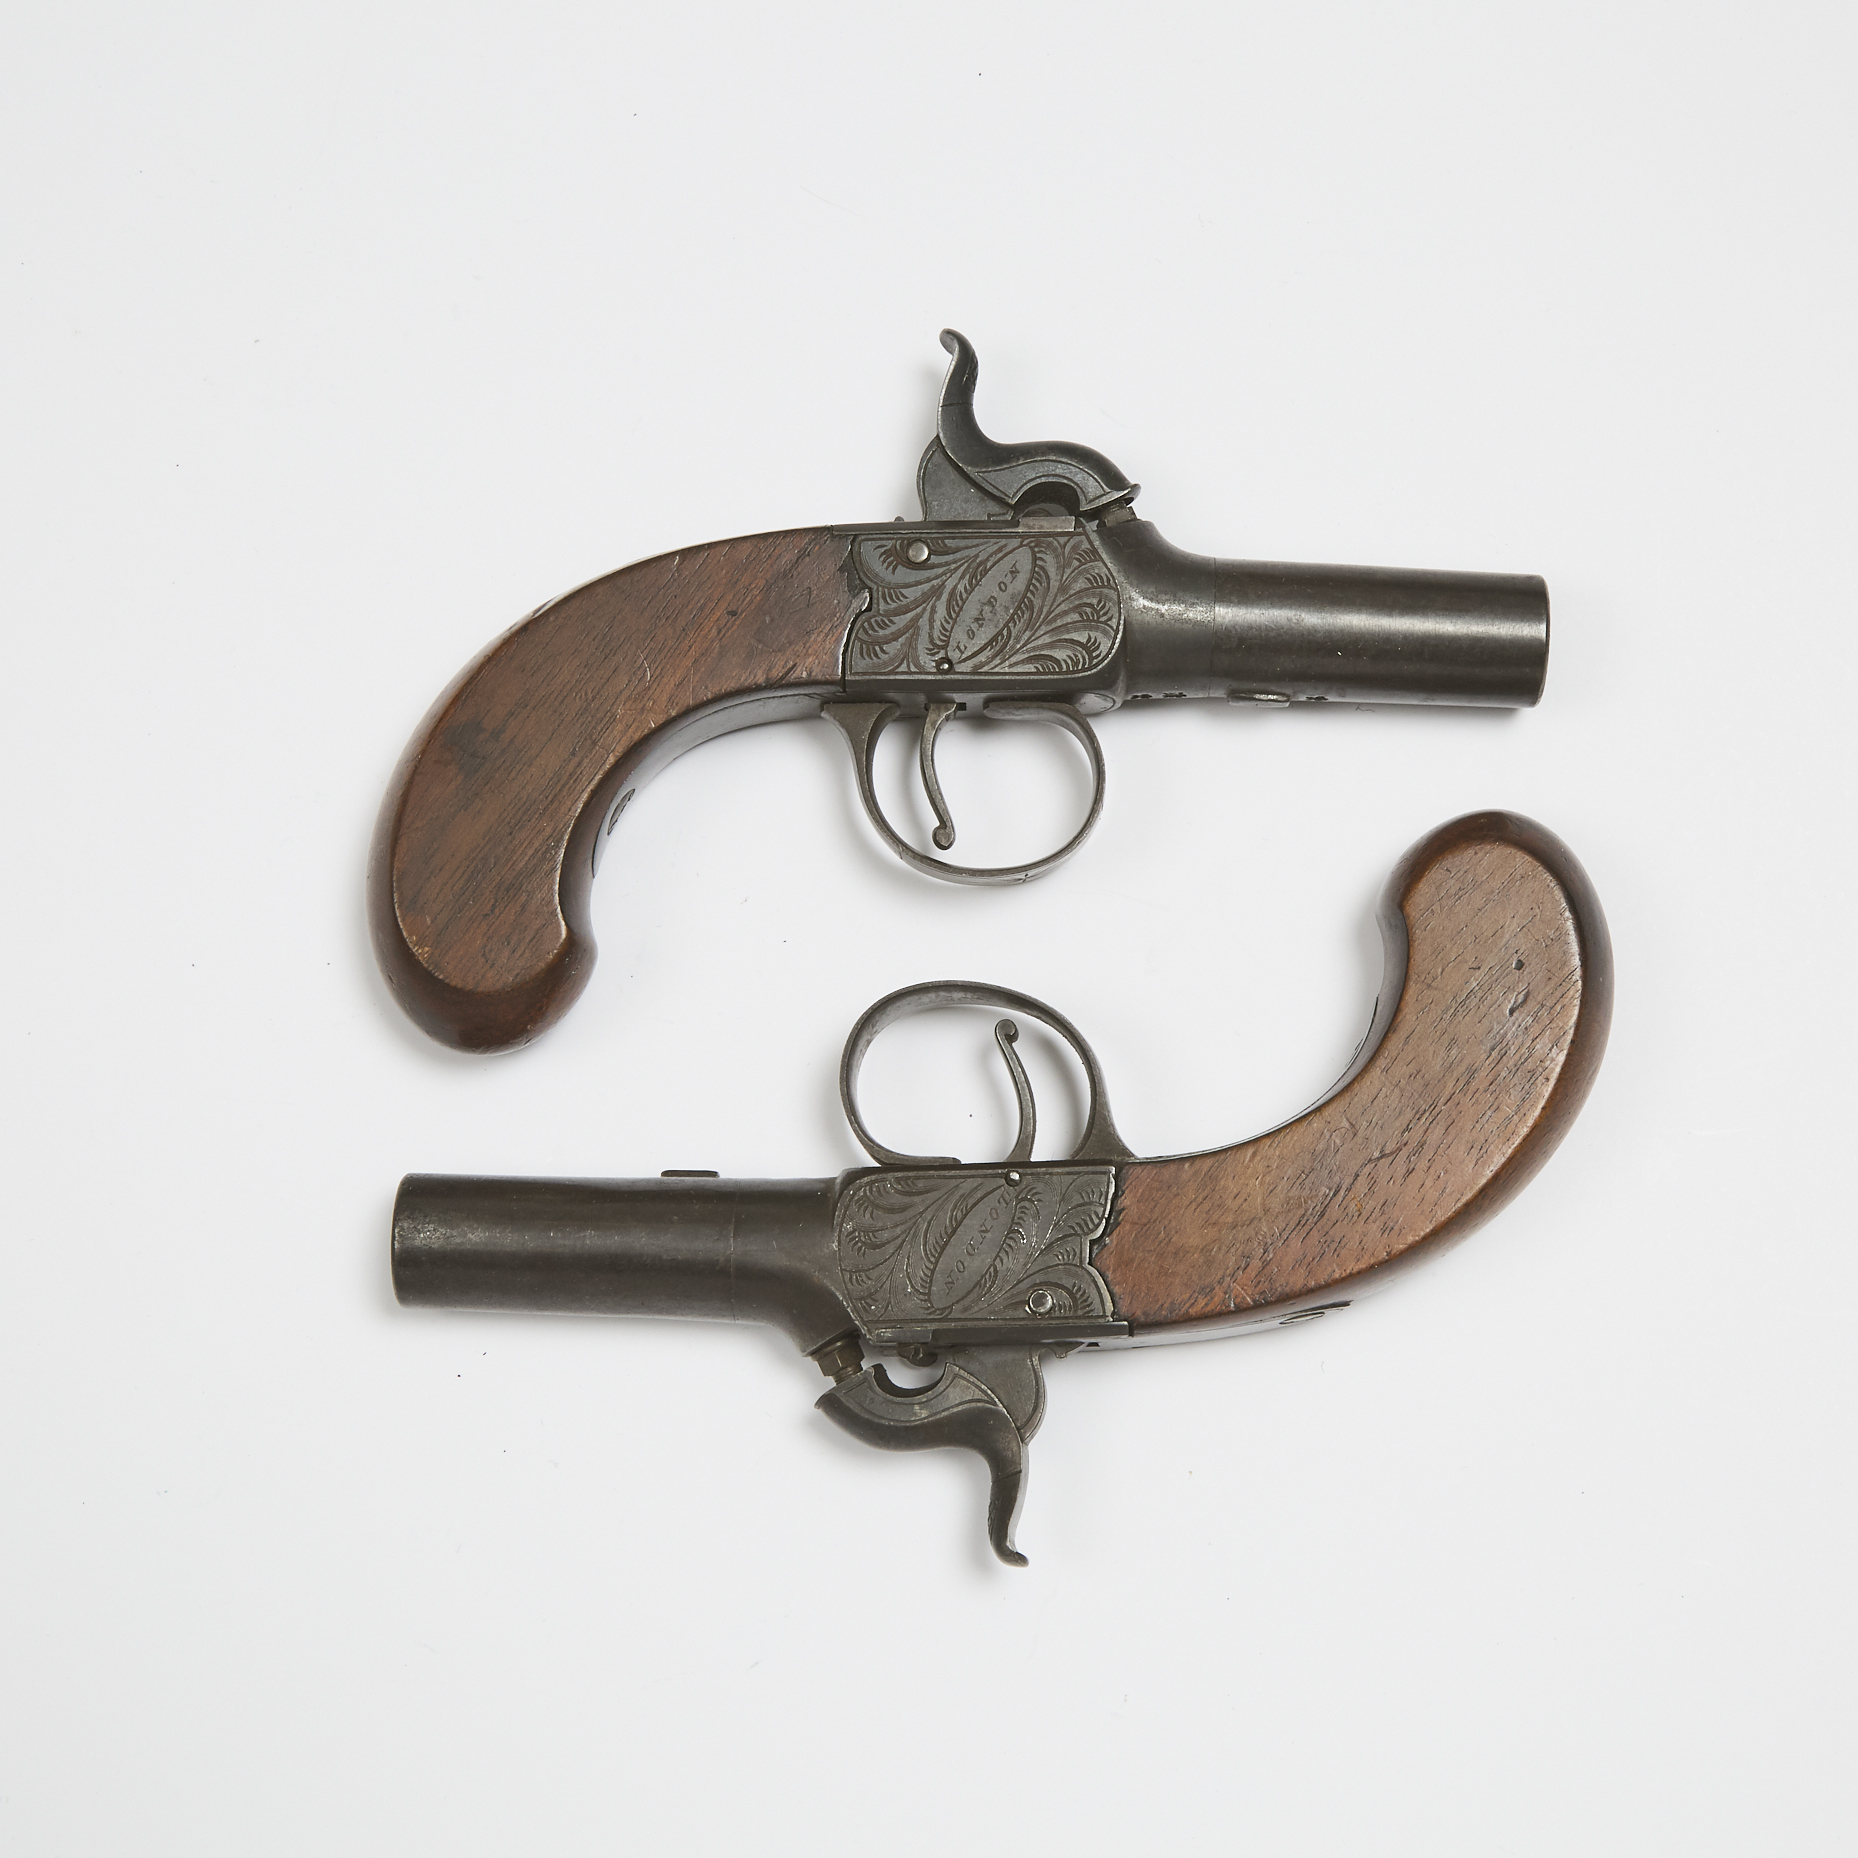 Pair of English Percussion Cap Boxlock Pocket Pistols, Williams, London, early-mid 19th century